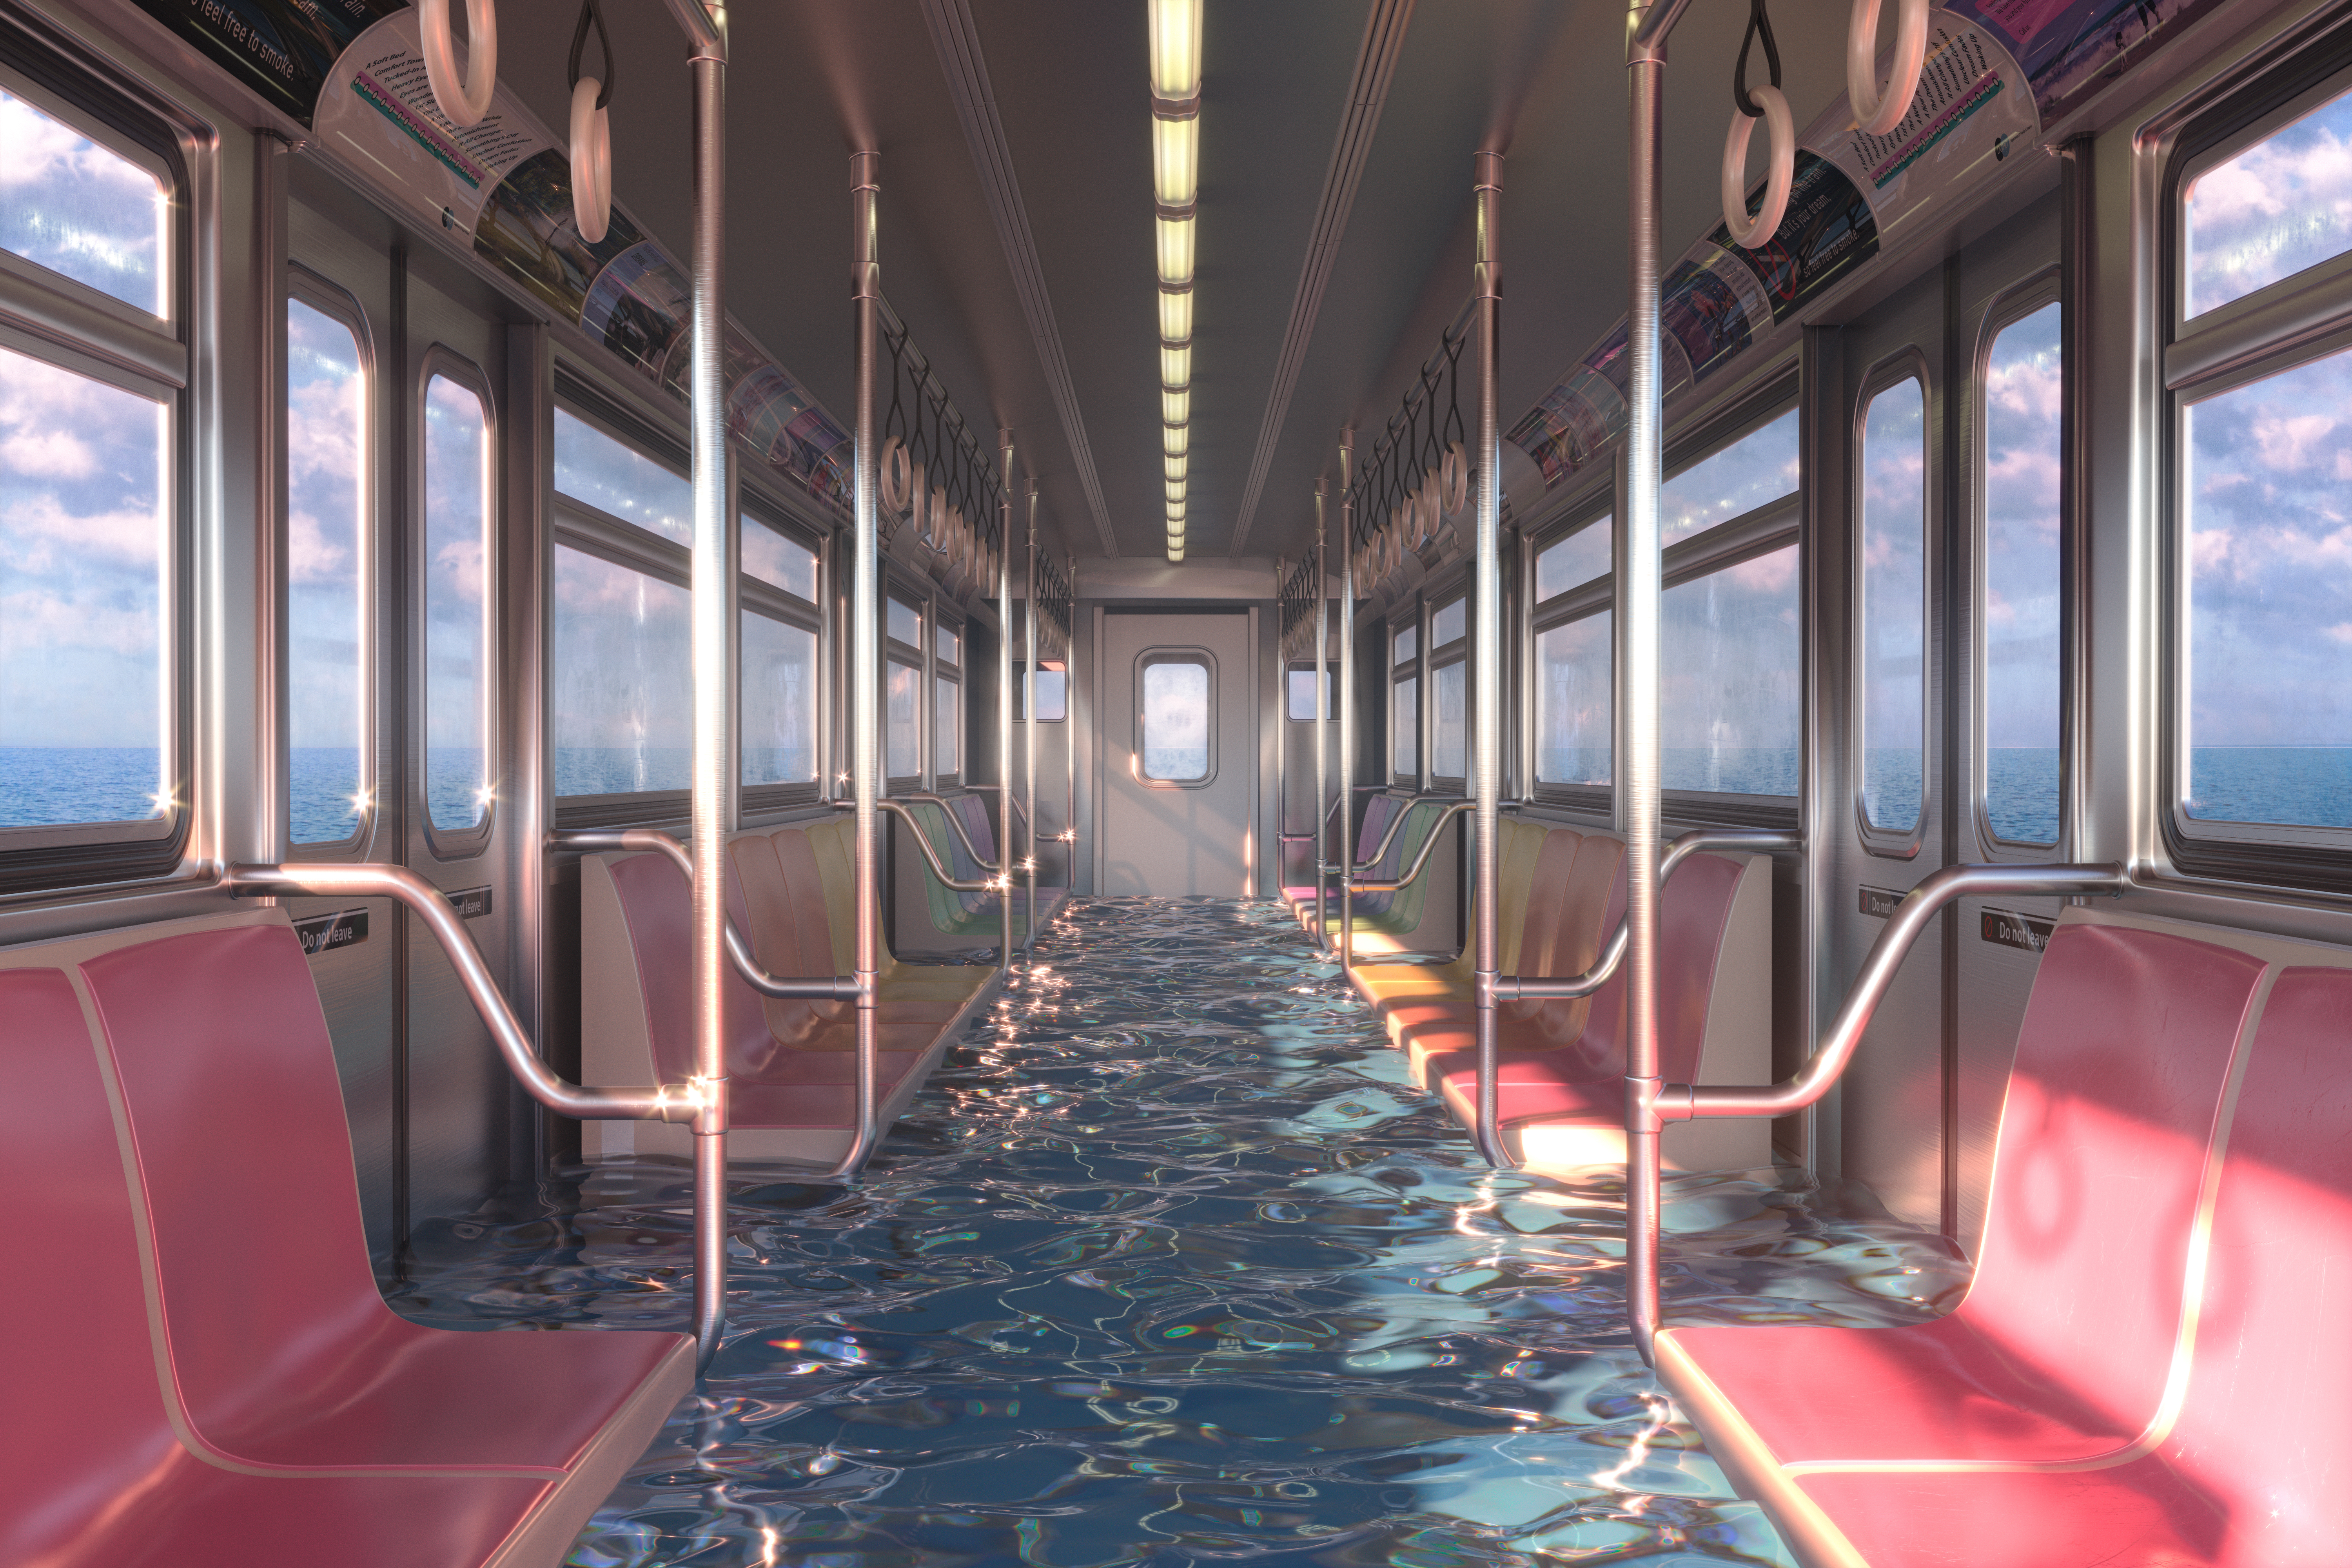 General 6000x4000 digital art artwork illustration abstract water clouds subway train ArtStation